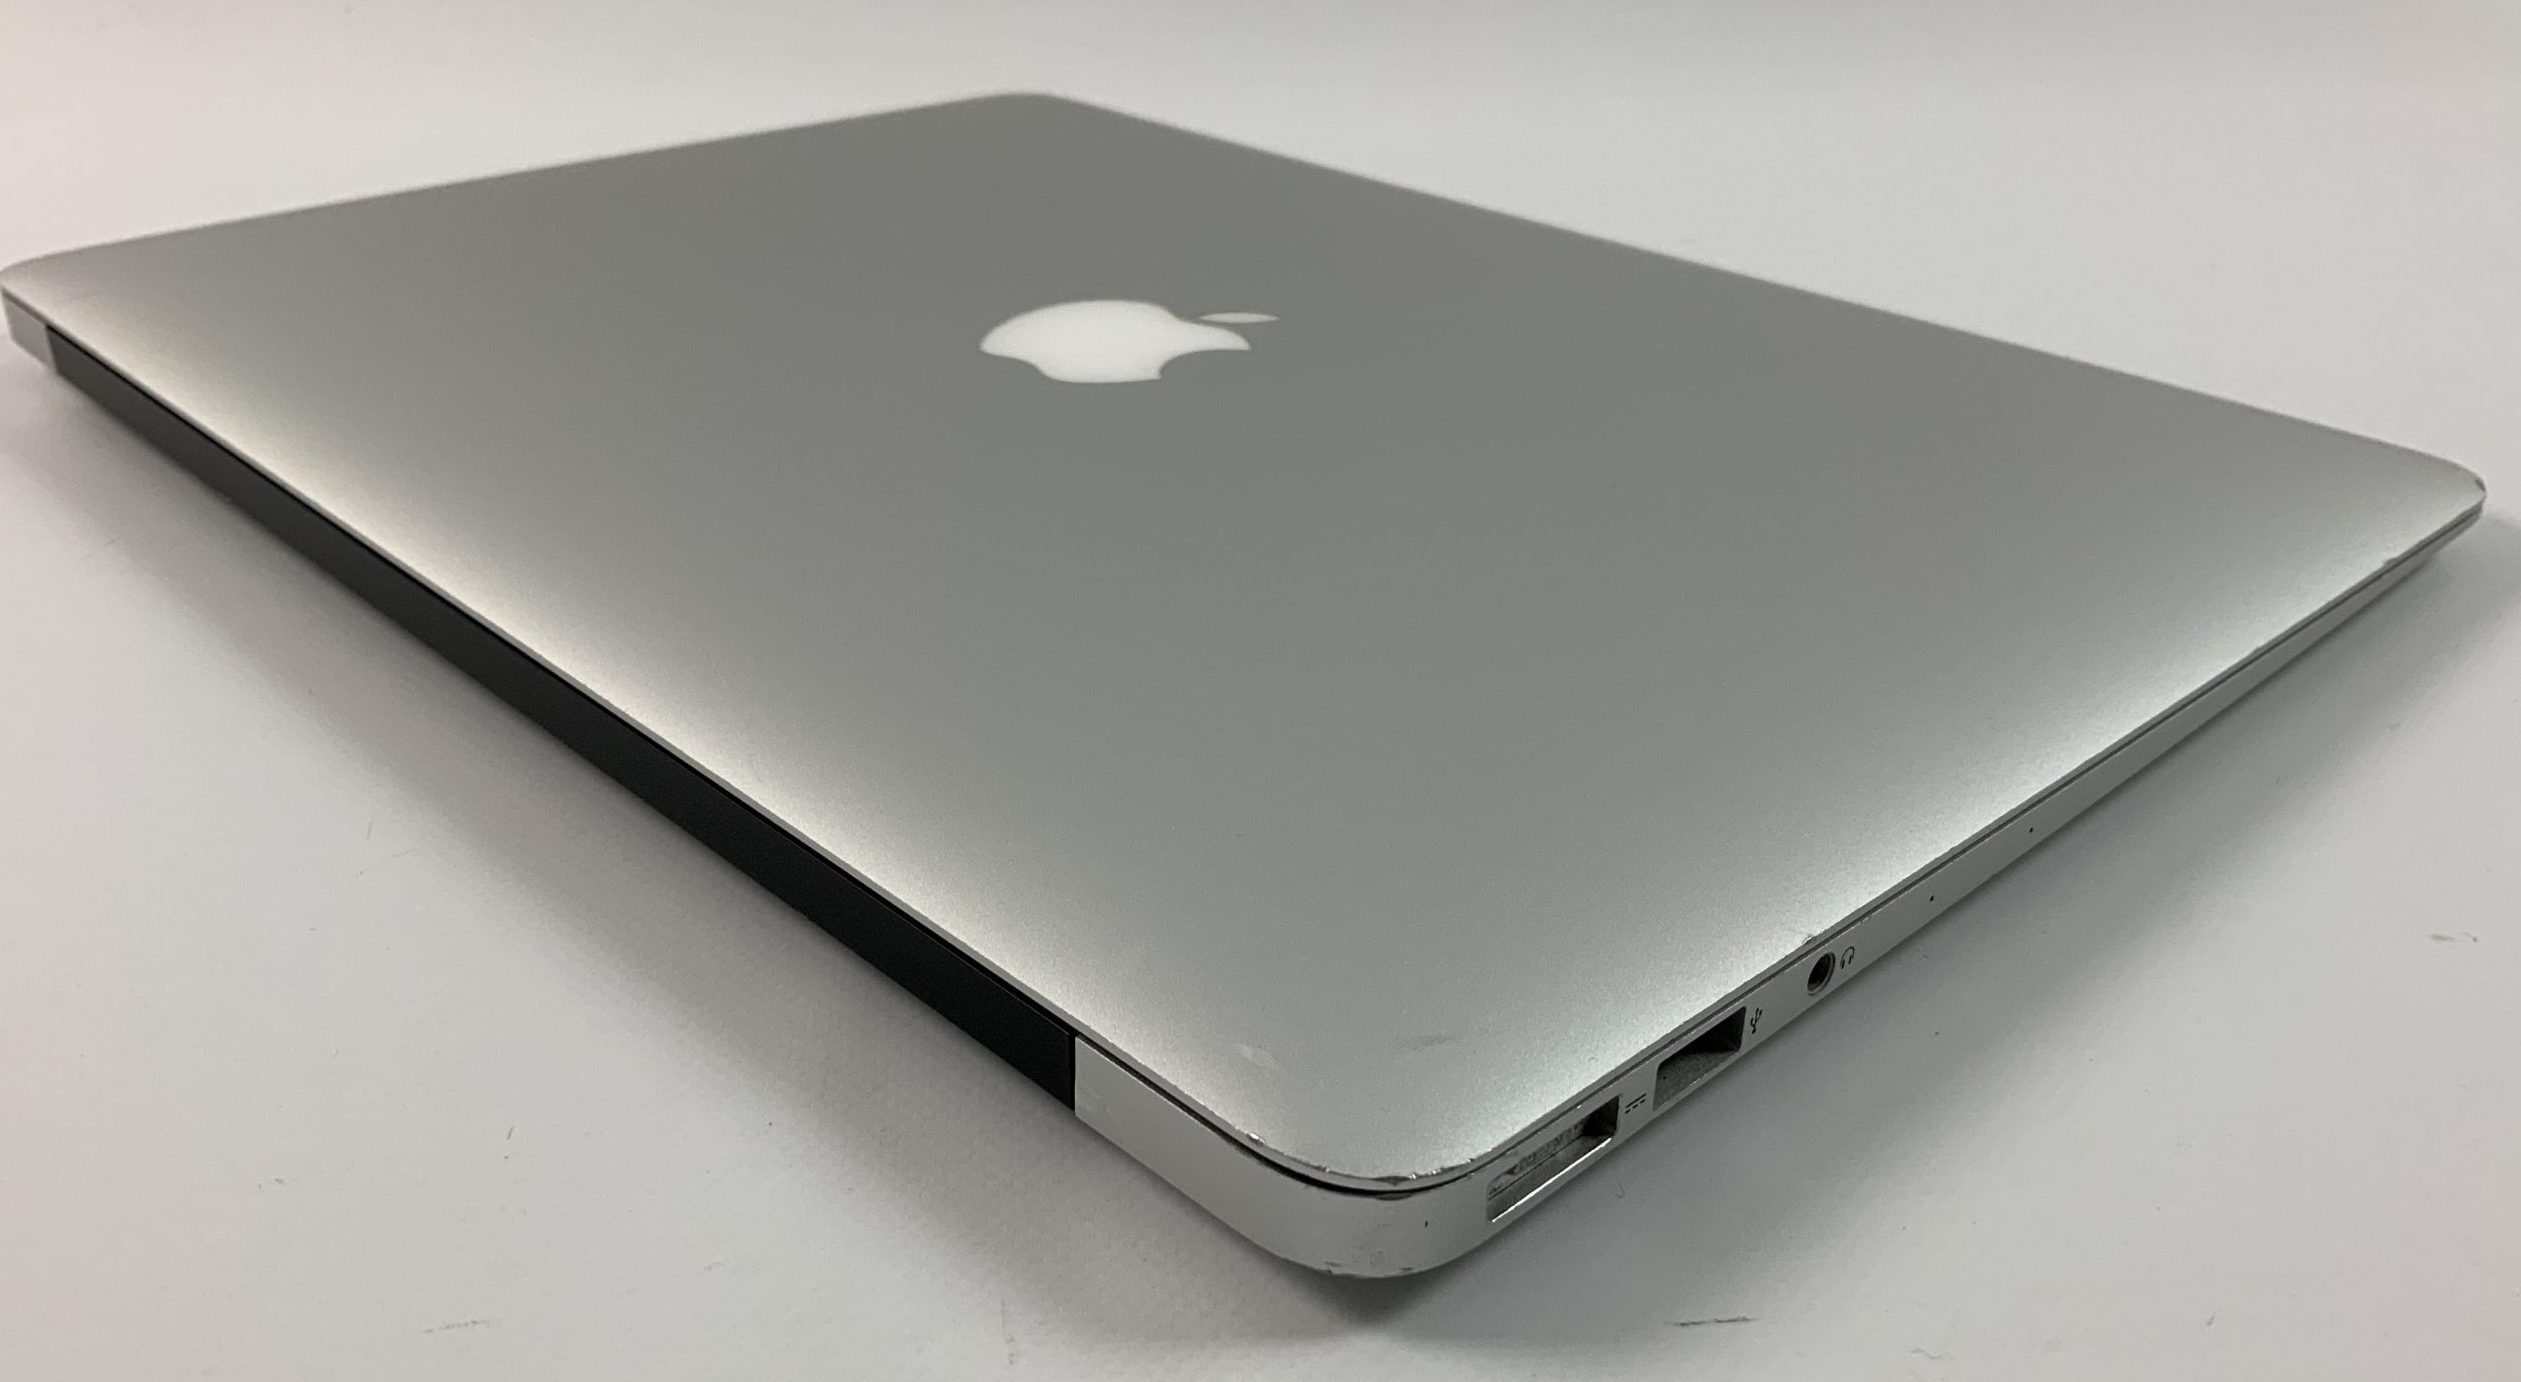 MacBook Air 13" Early 2015 (Intel Core i5 1.6 GHz 8 GB RAM 128 GB SSD), Intel Core i5 1.6 GHz, 8 GB RAM, 128 GB SSD, image 4